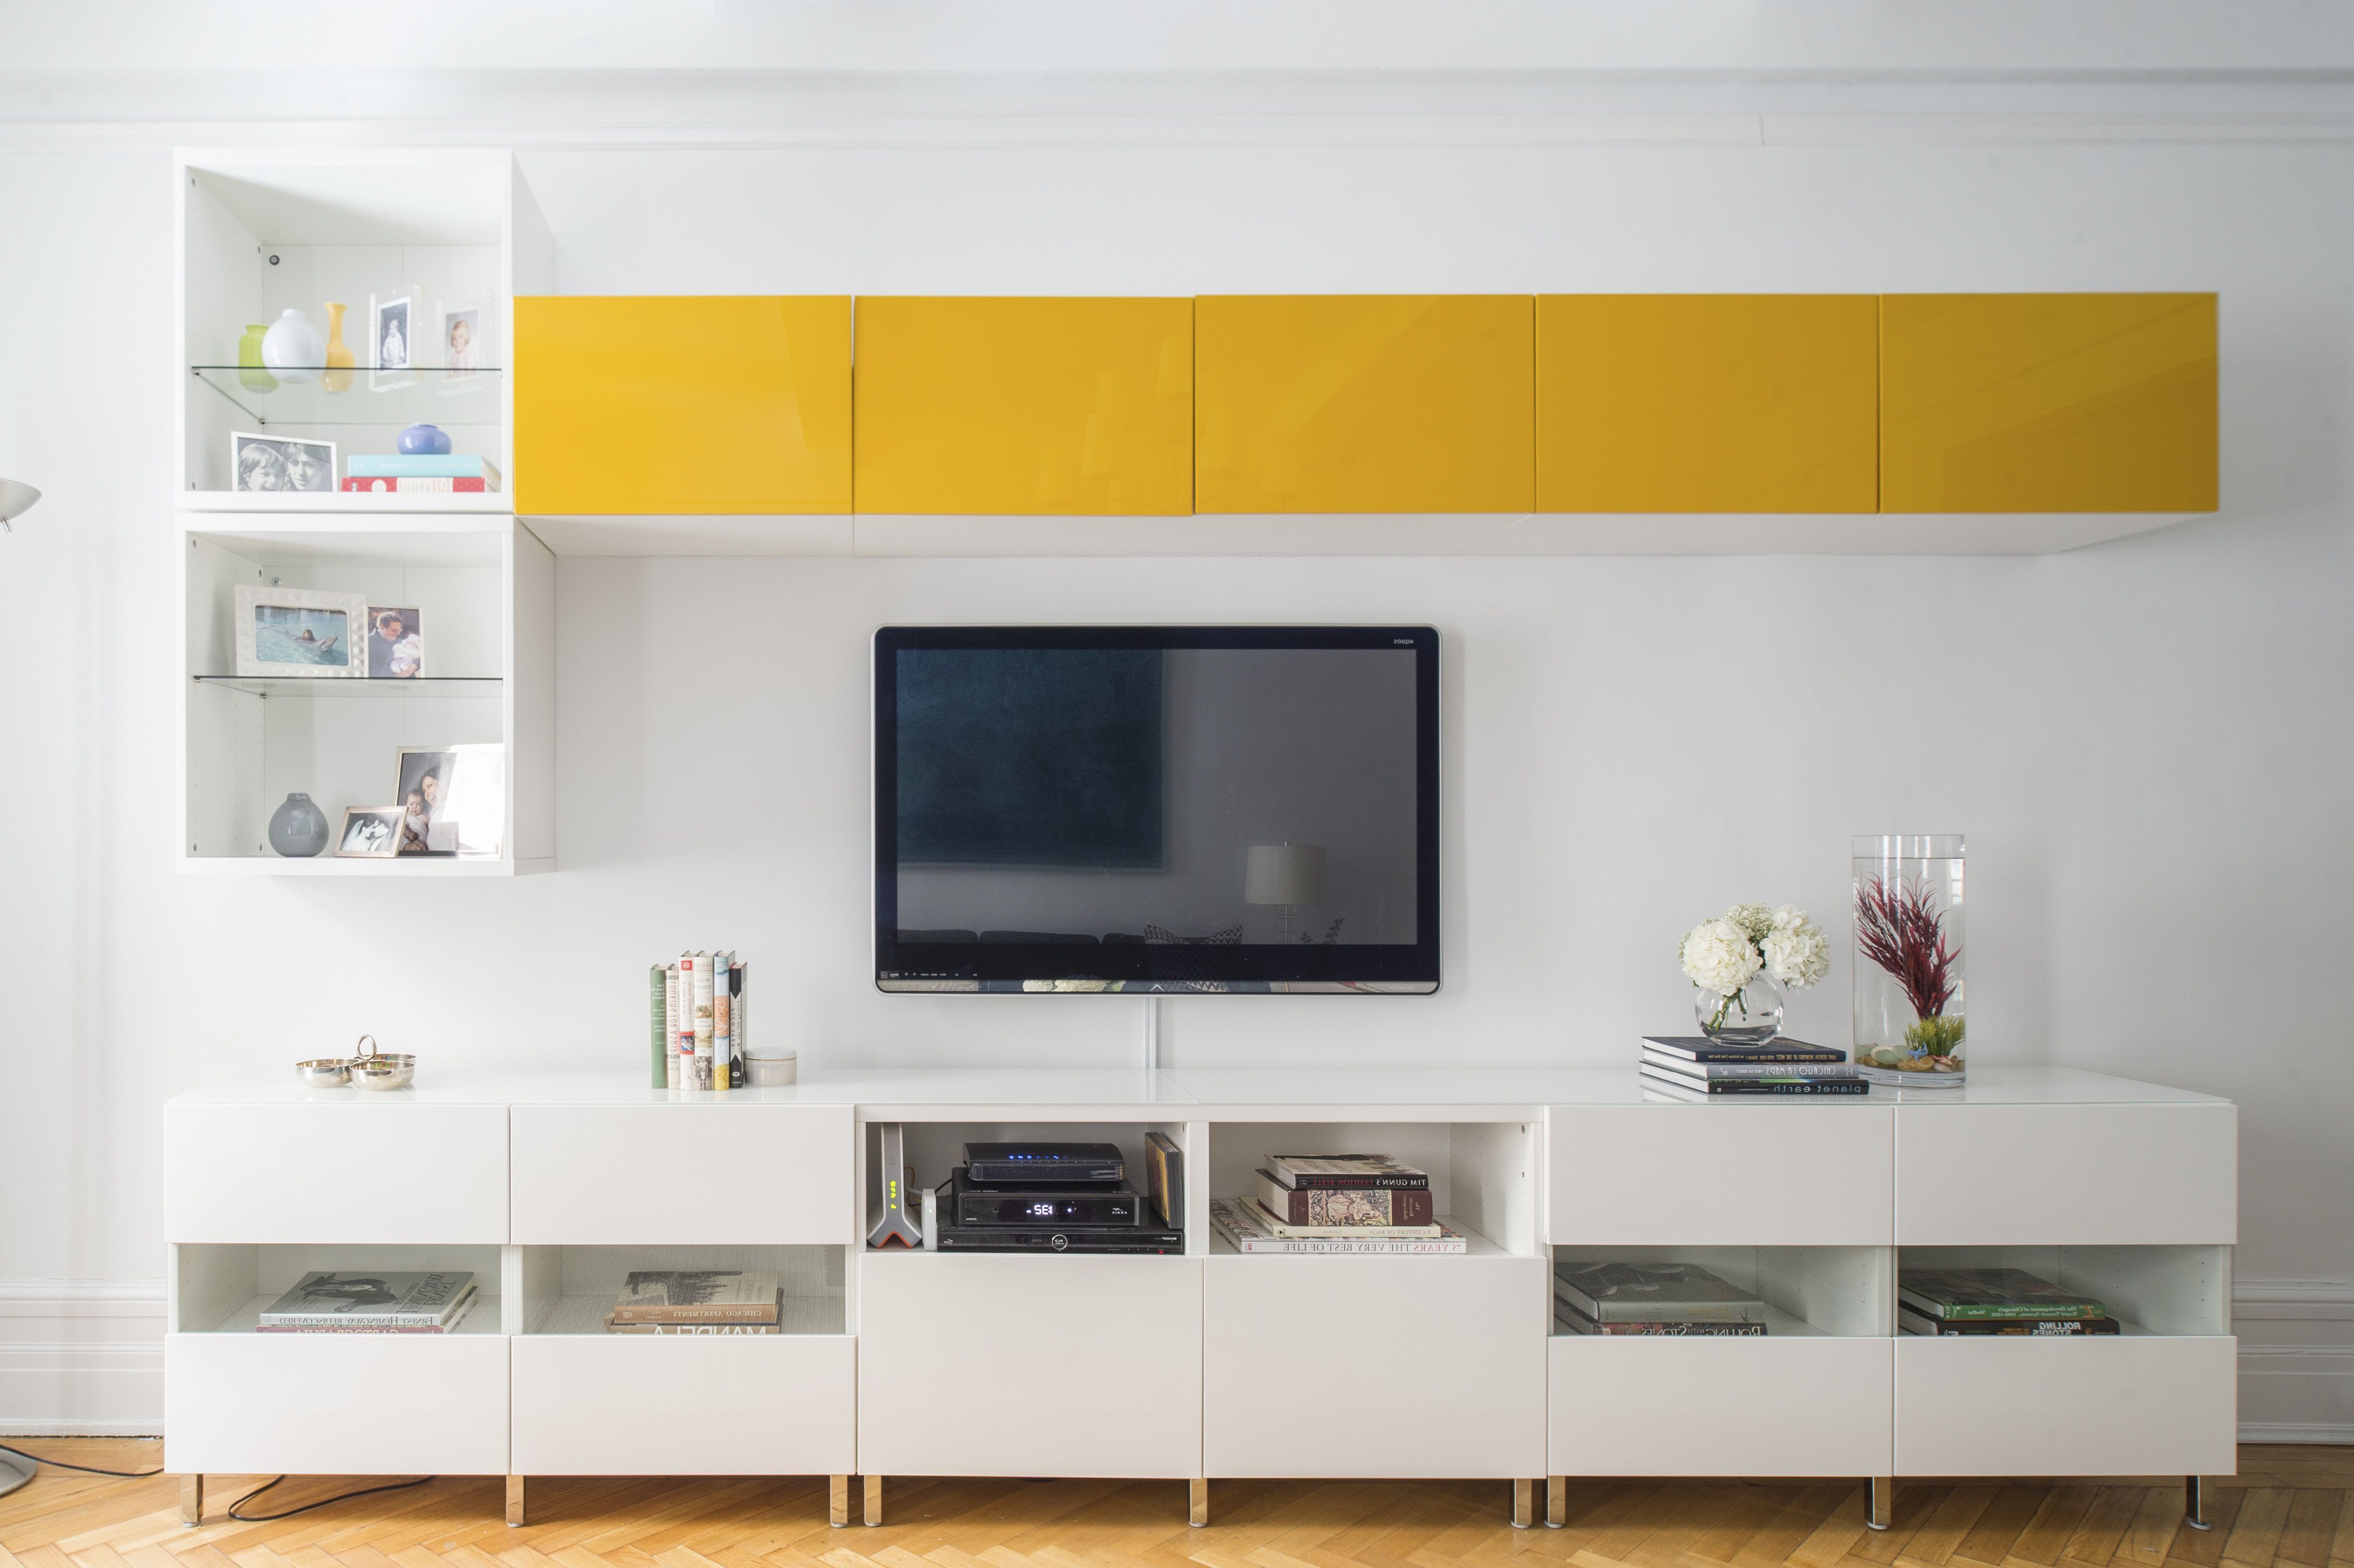 TV Showcase Design Ideas For Living Room Decor #15524 ...